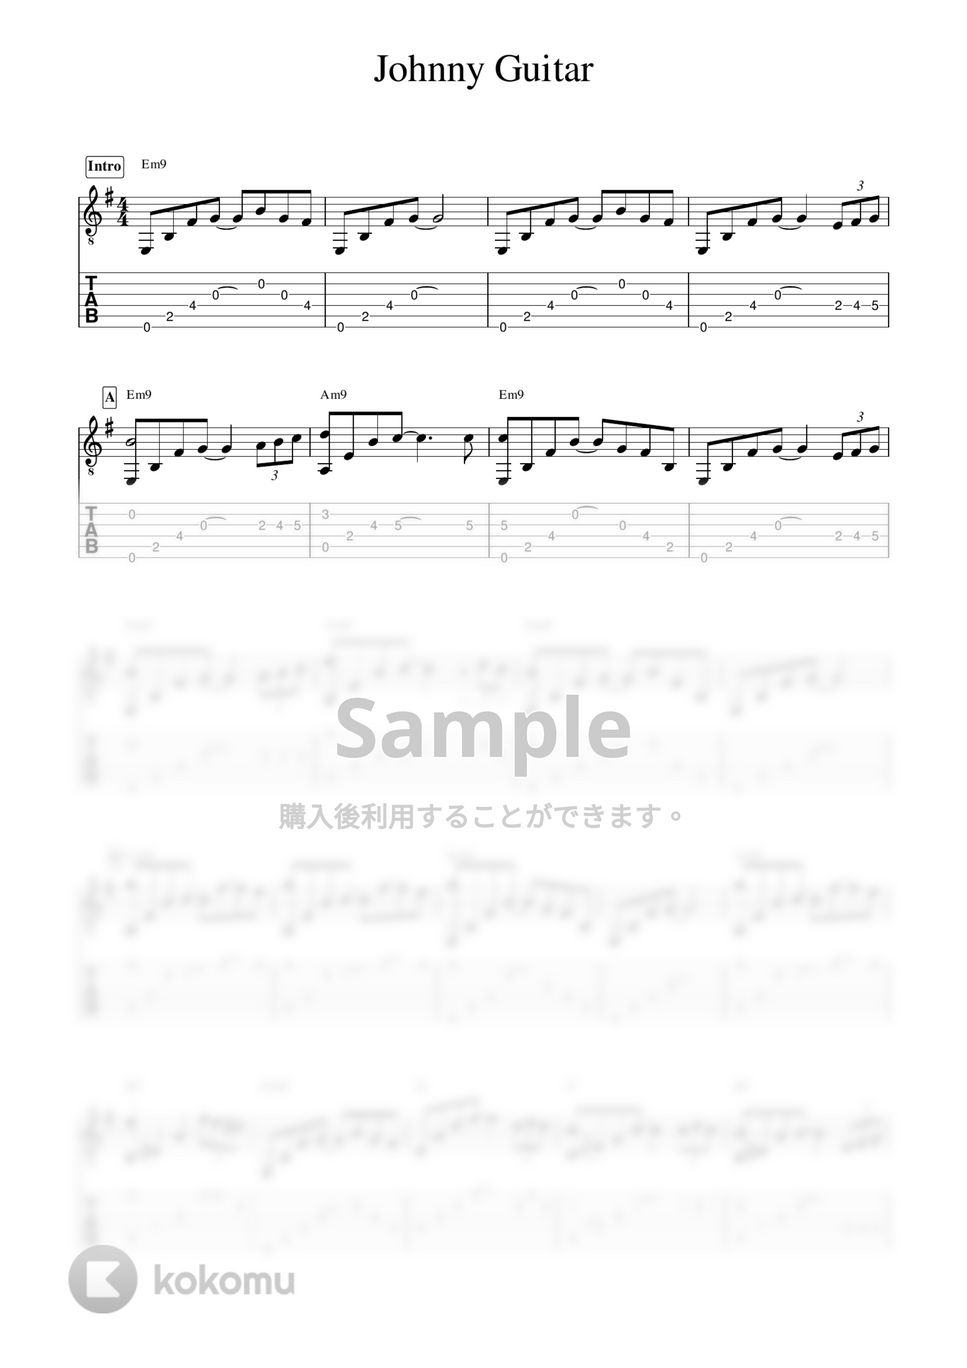 LEE PEGGY - Johnny Guitar (ソロギターアレンジ) by 早乙女浩司